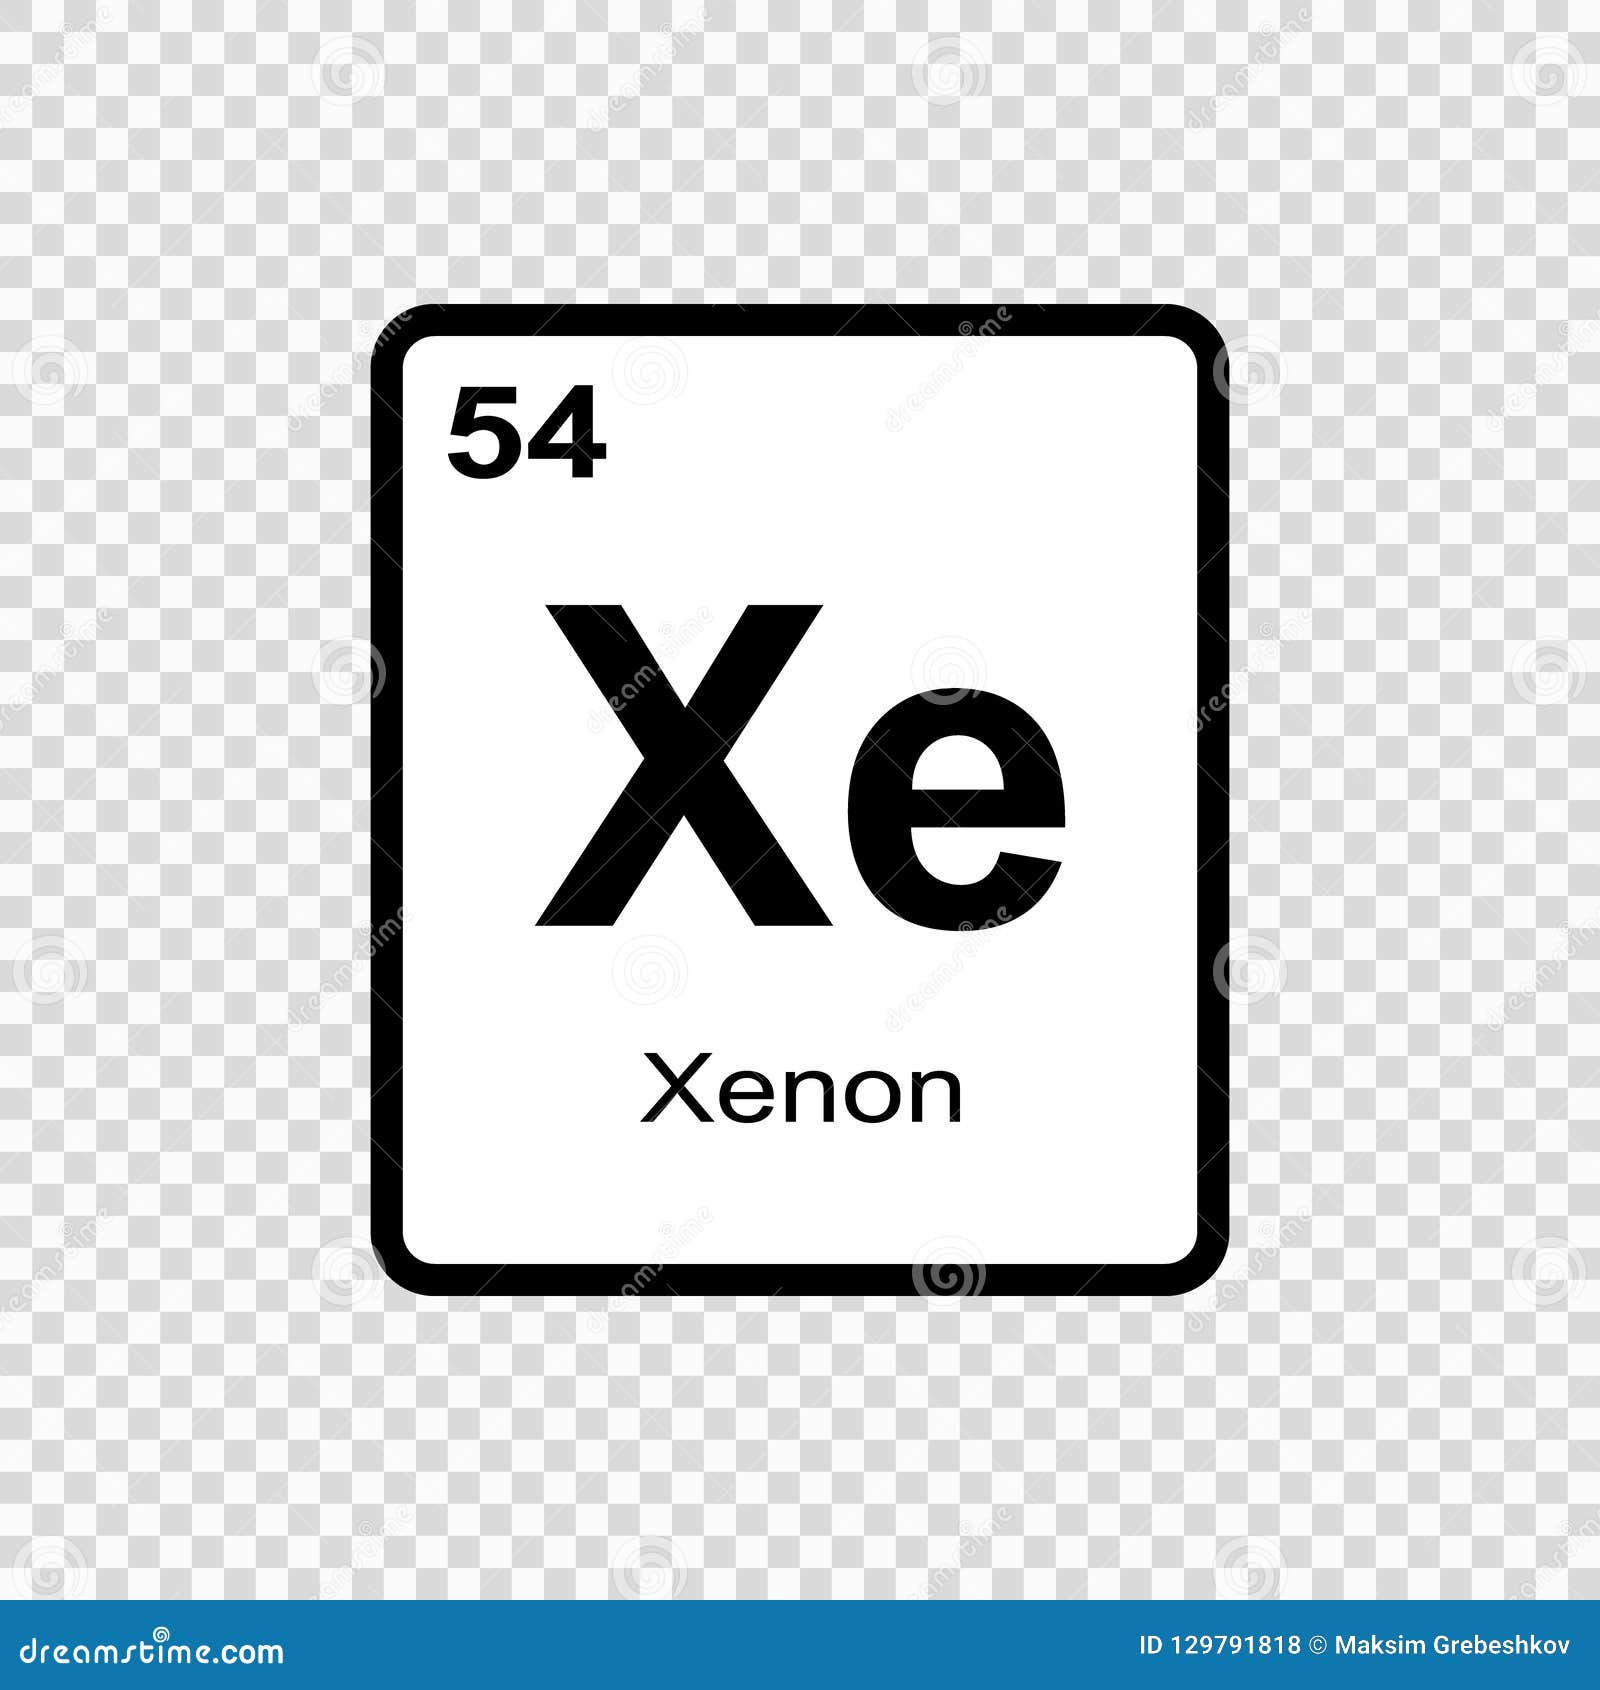 Ксенон вещество. Ксенон хим элемент. Xenon химический элемент. Значок ксенона. Ксенон элемент таблицы.